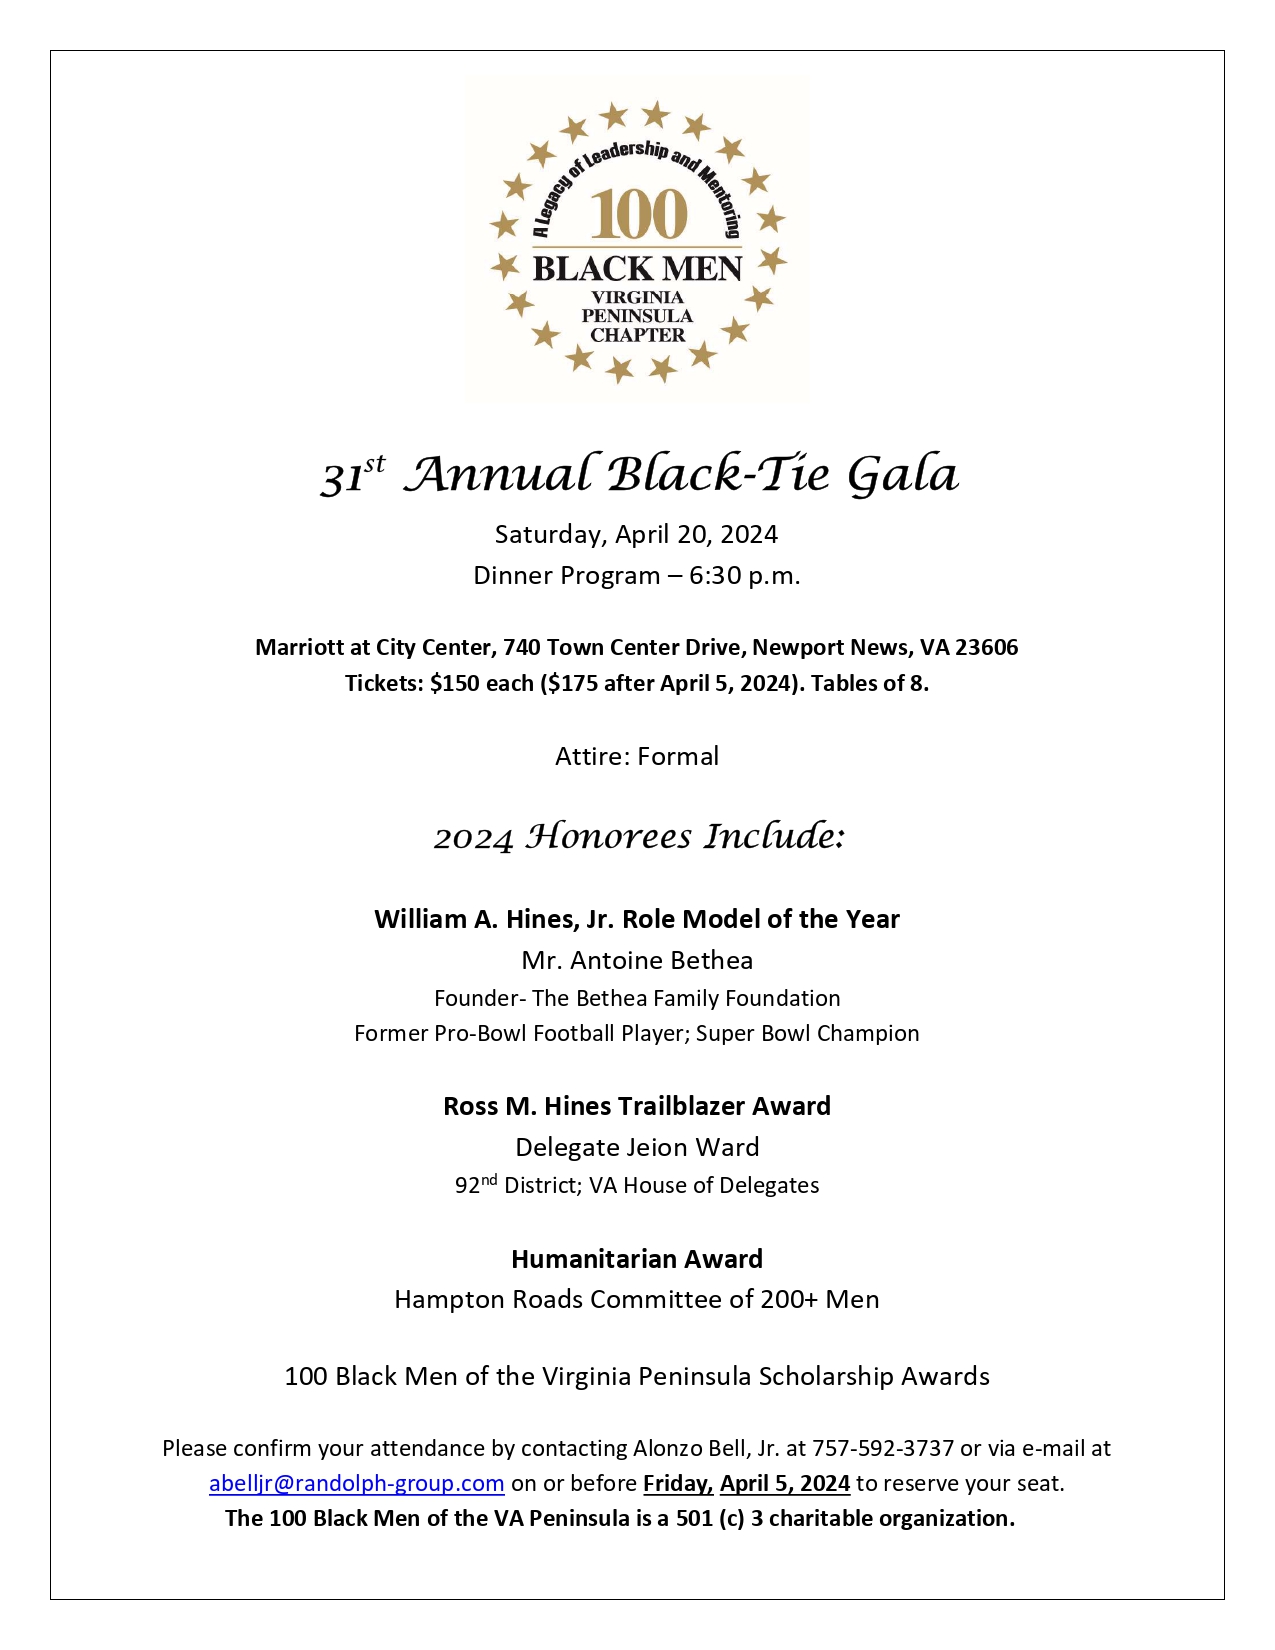 100 Black Men - 31st Annual Black Tie Gala Invitation - 2024_page001